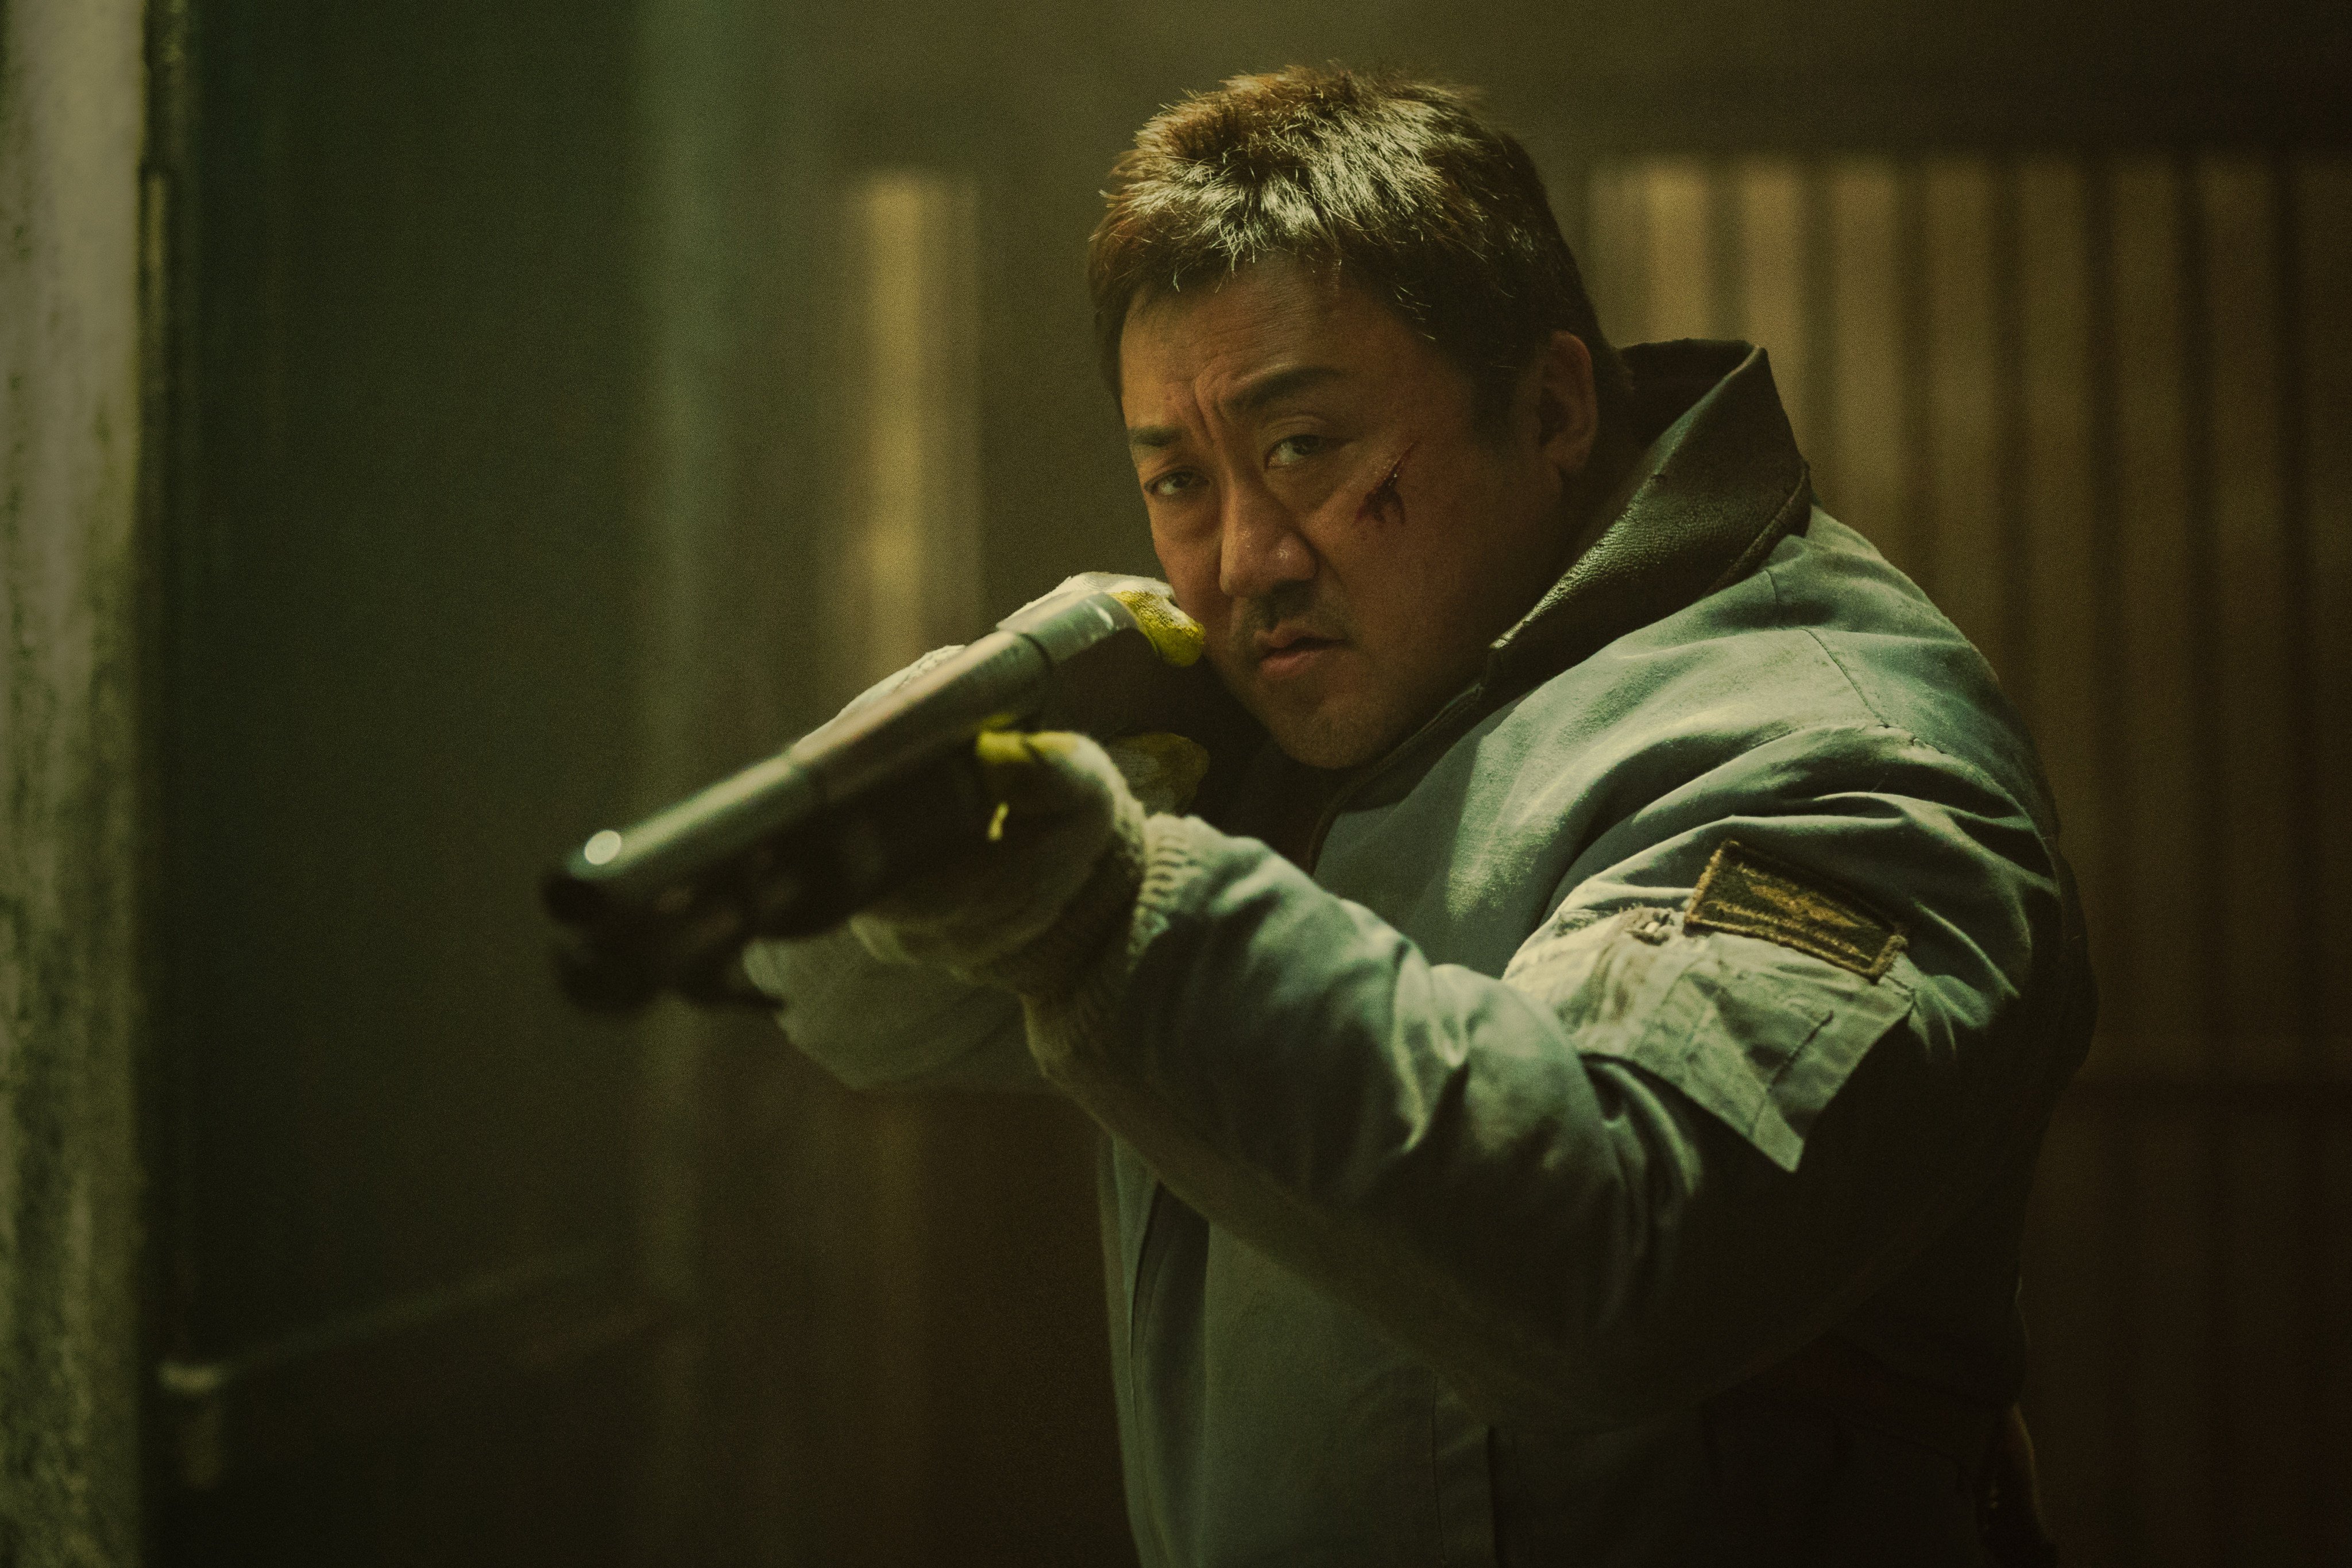 Ma Dong-seok as Nam San in a still from “Badland Hunters”. Photo: Cha Min-jung/Netflix